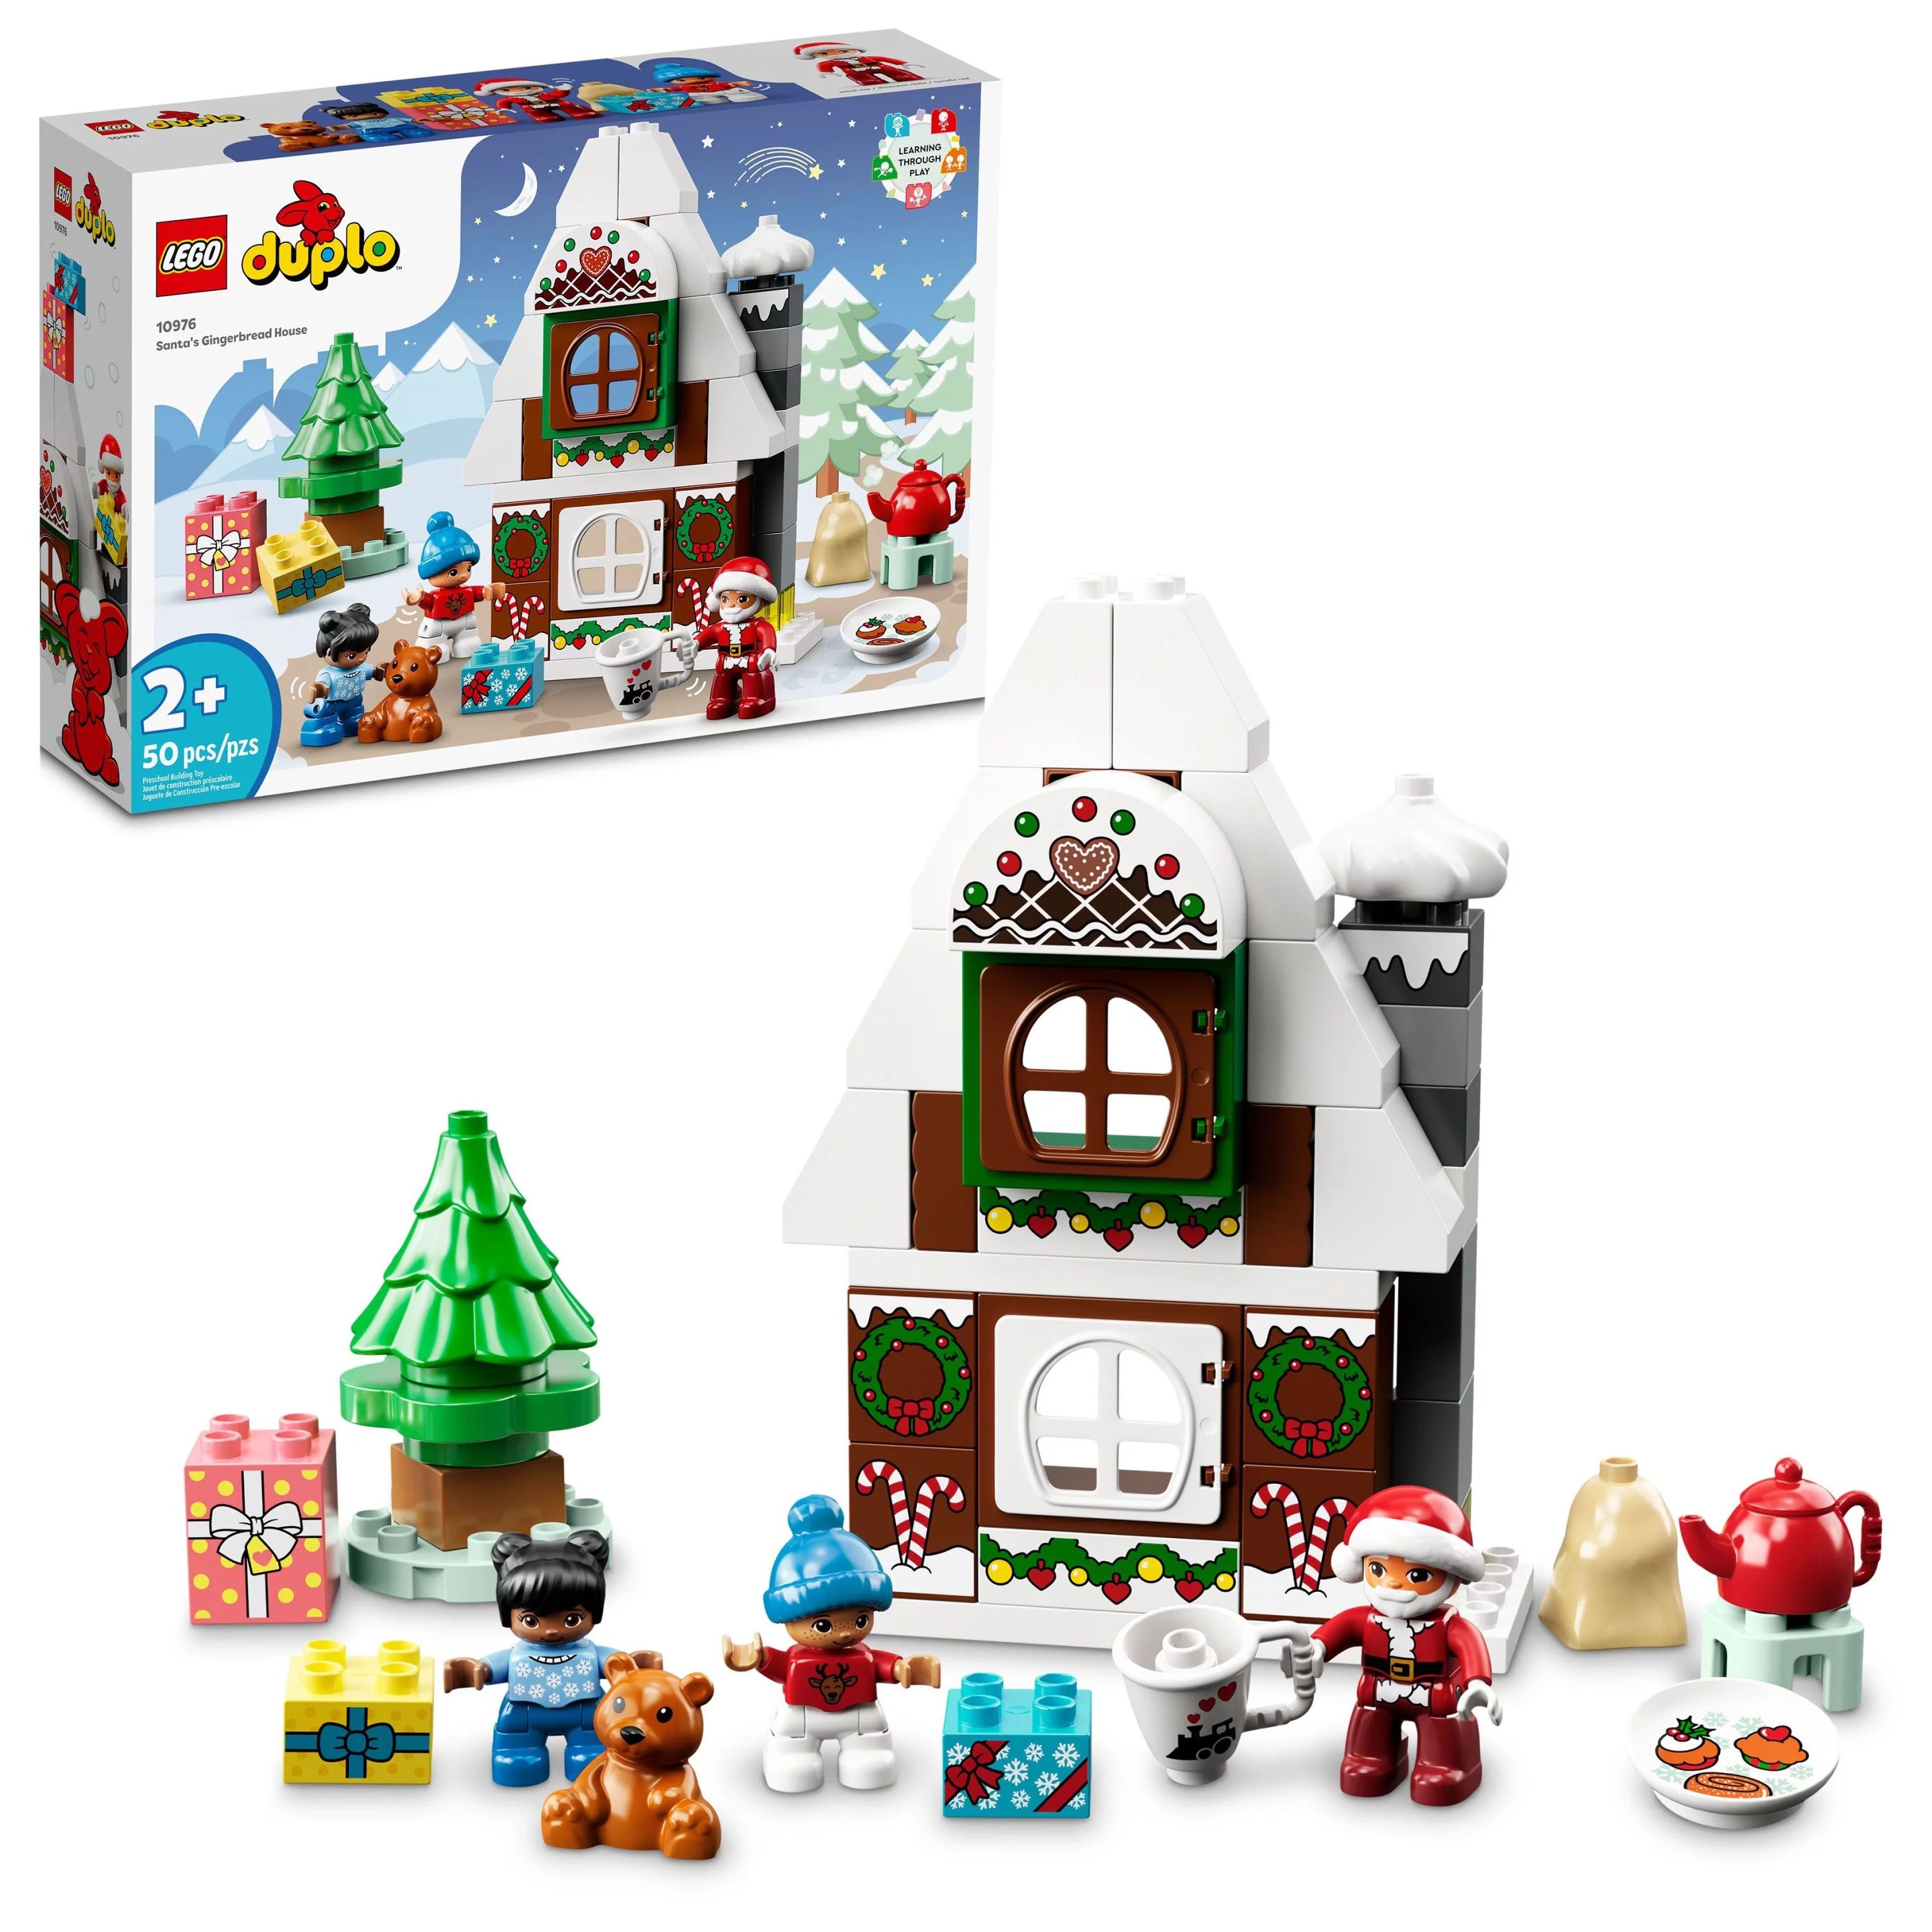 LEGO DUPLO Santa's Gingerbread House 10976 Toy with Santa Claus Figure, Christmas Present, Stocki... | Walmart (US)